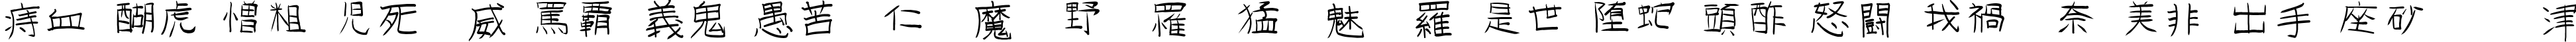 Пример написания английского алфавита шрифтом GoJuOn